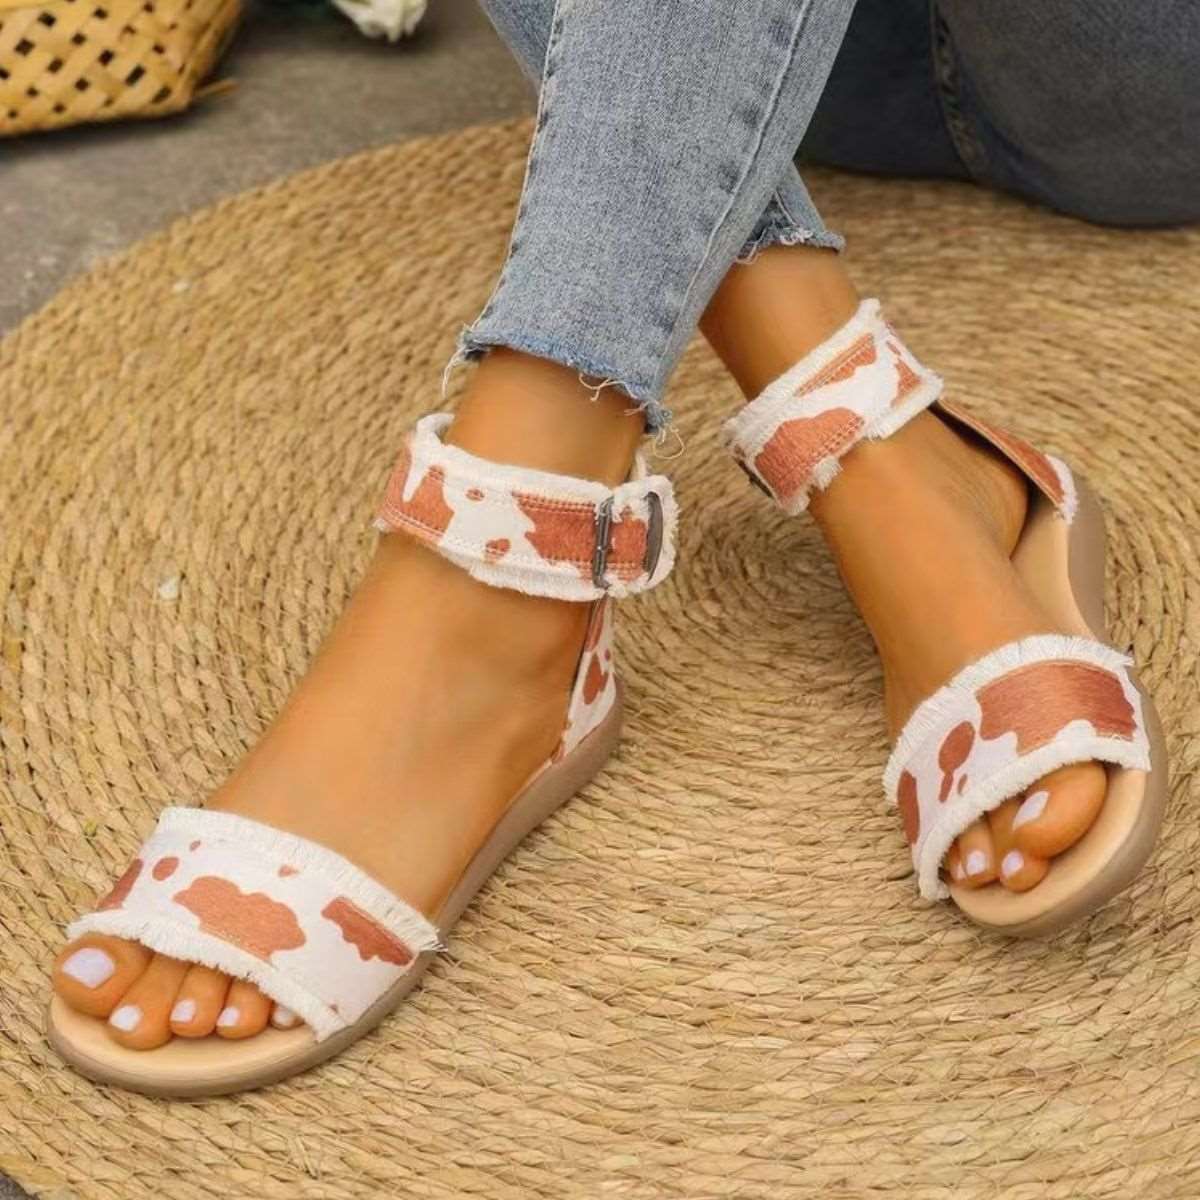 Animal Print Open Toe Sandals White